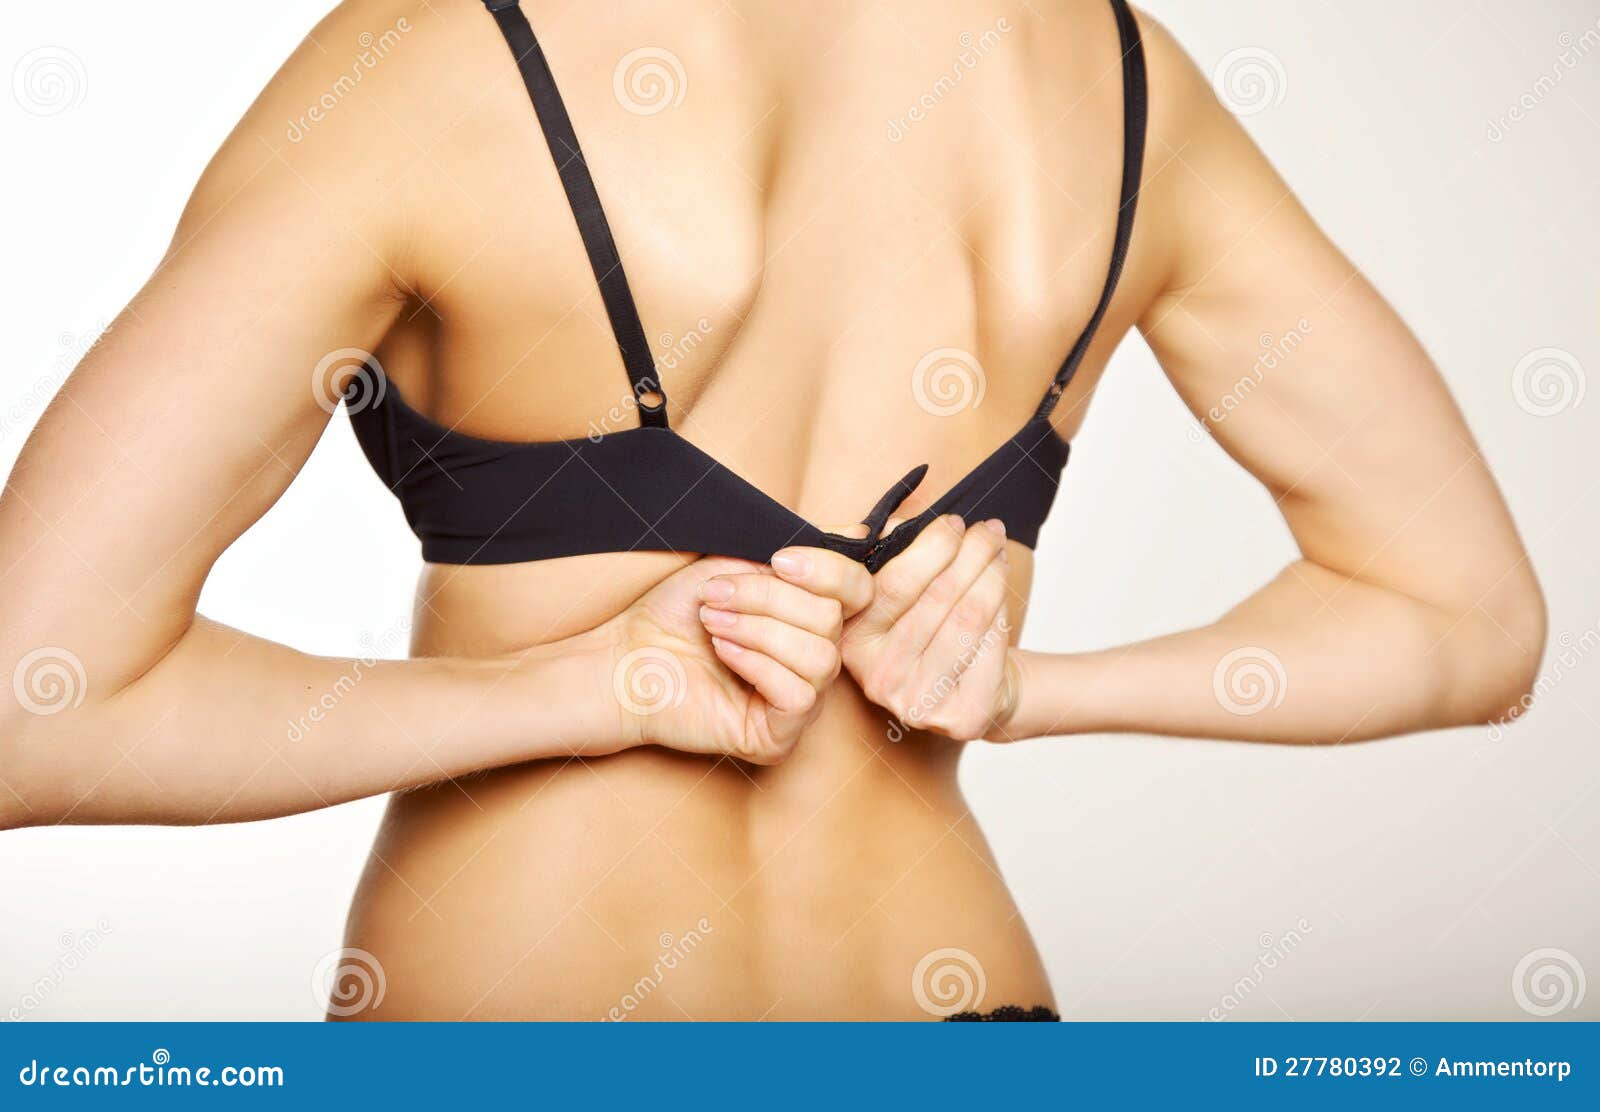 Woman Unhooking Her Bra stock photo. Image of seductive - 27780392